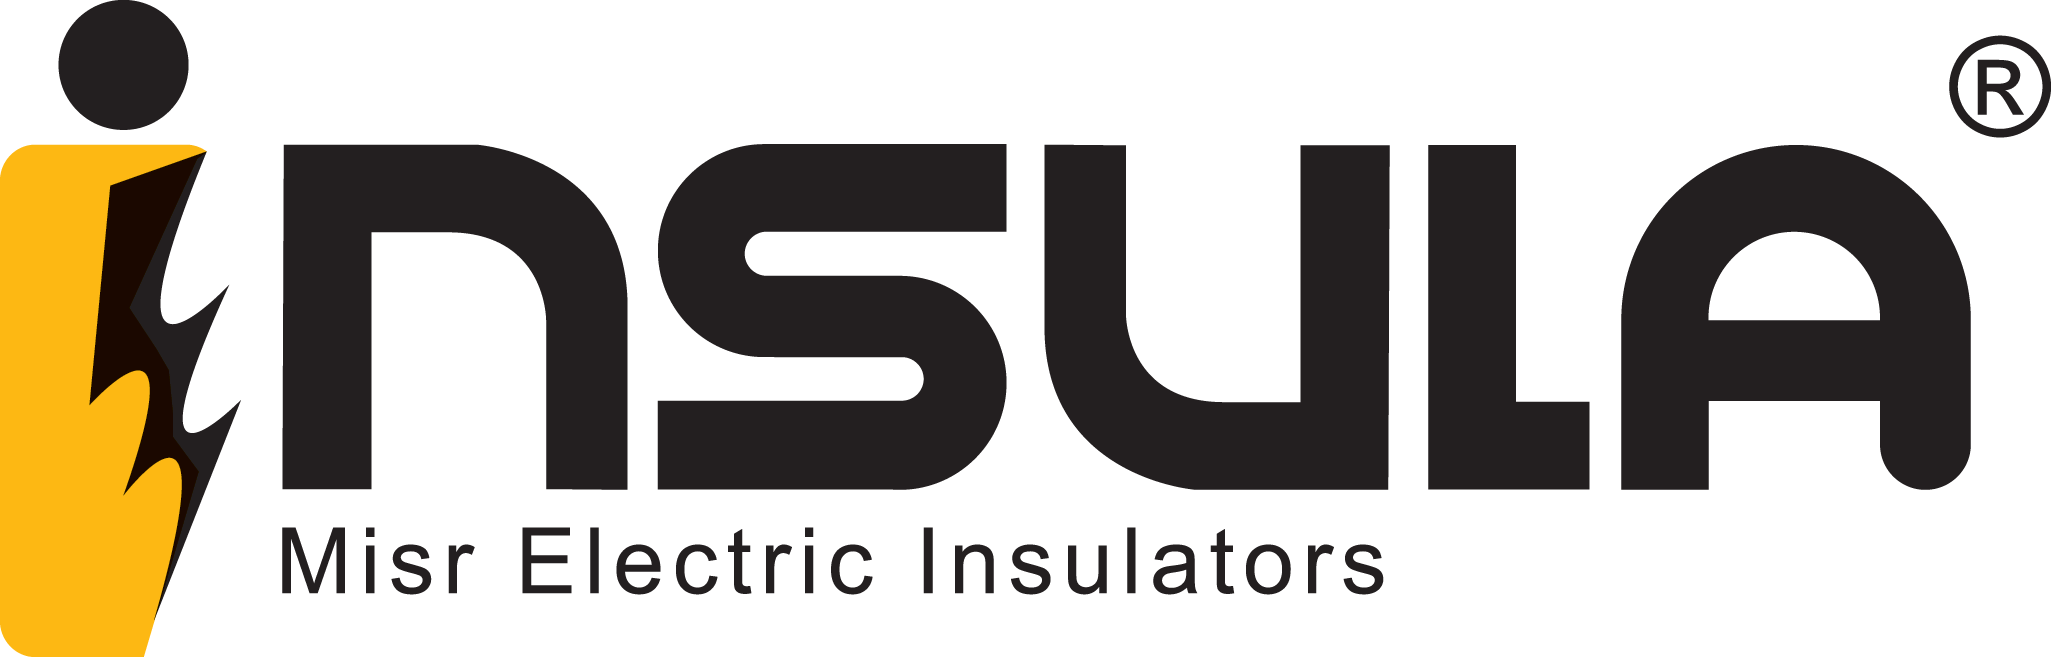 INSULA - Misr Electric Insulators